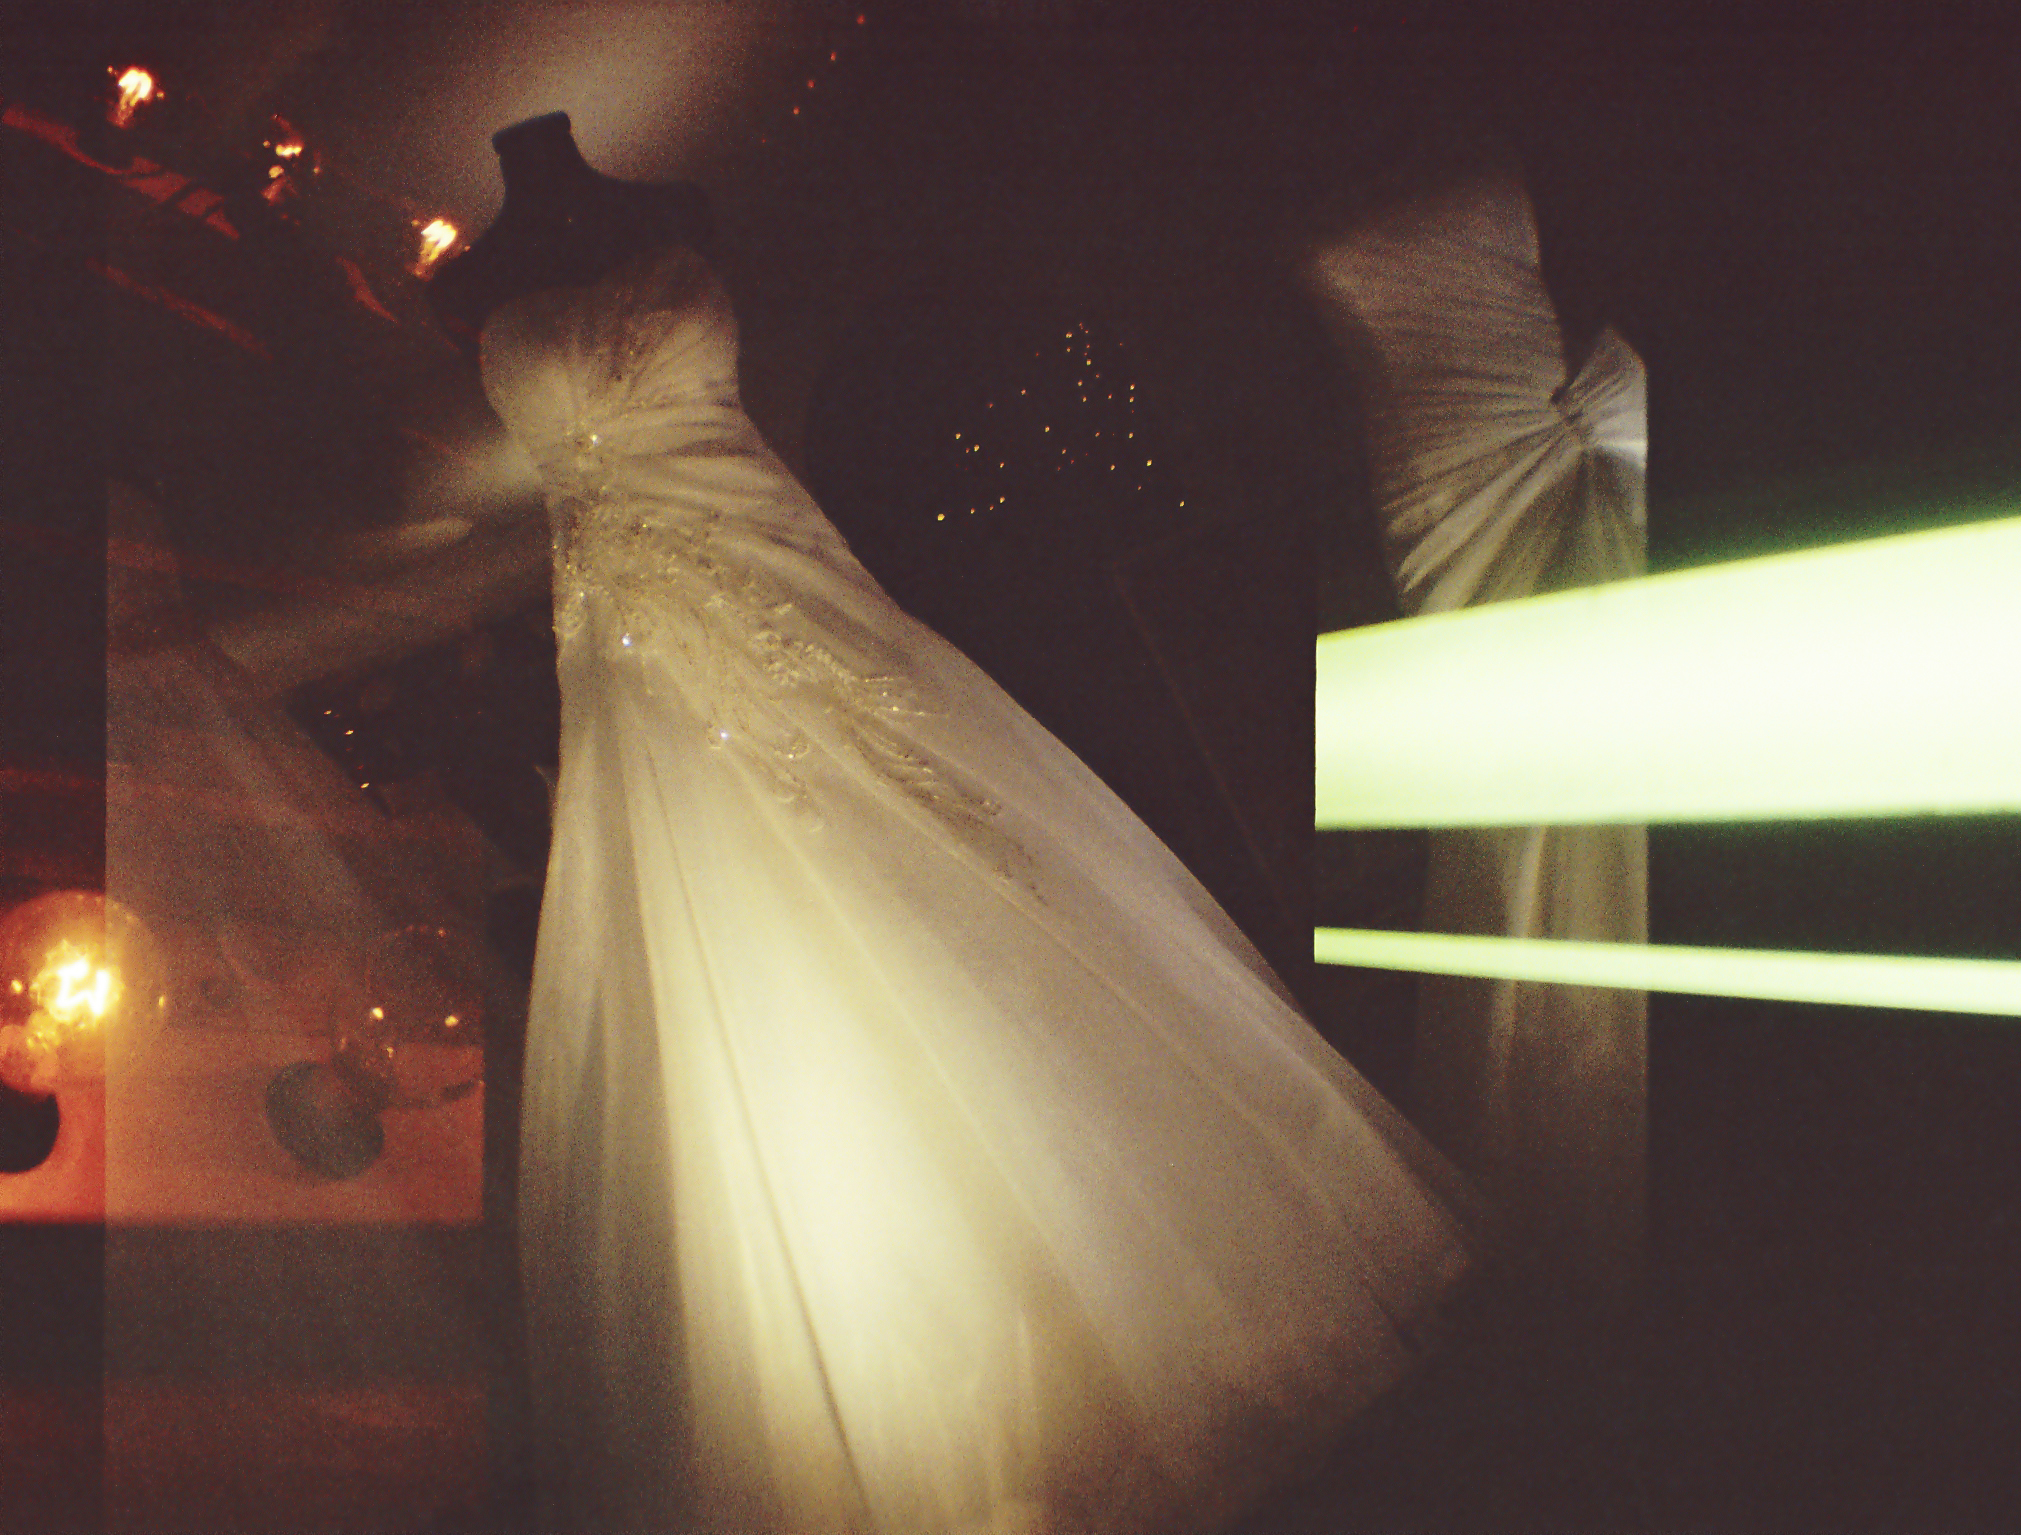 Lomo_Hochzeitskleid.jpg